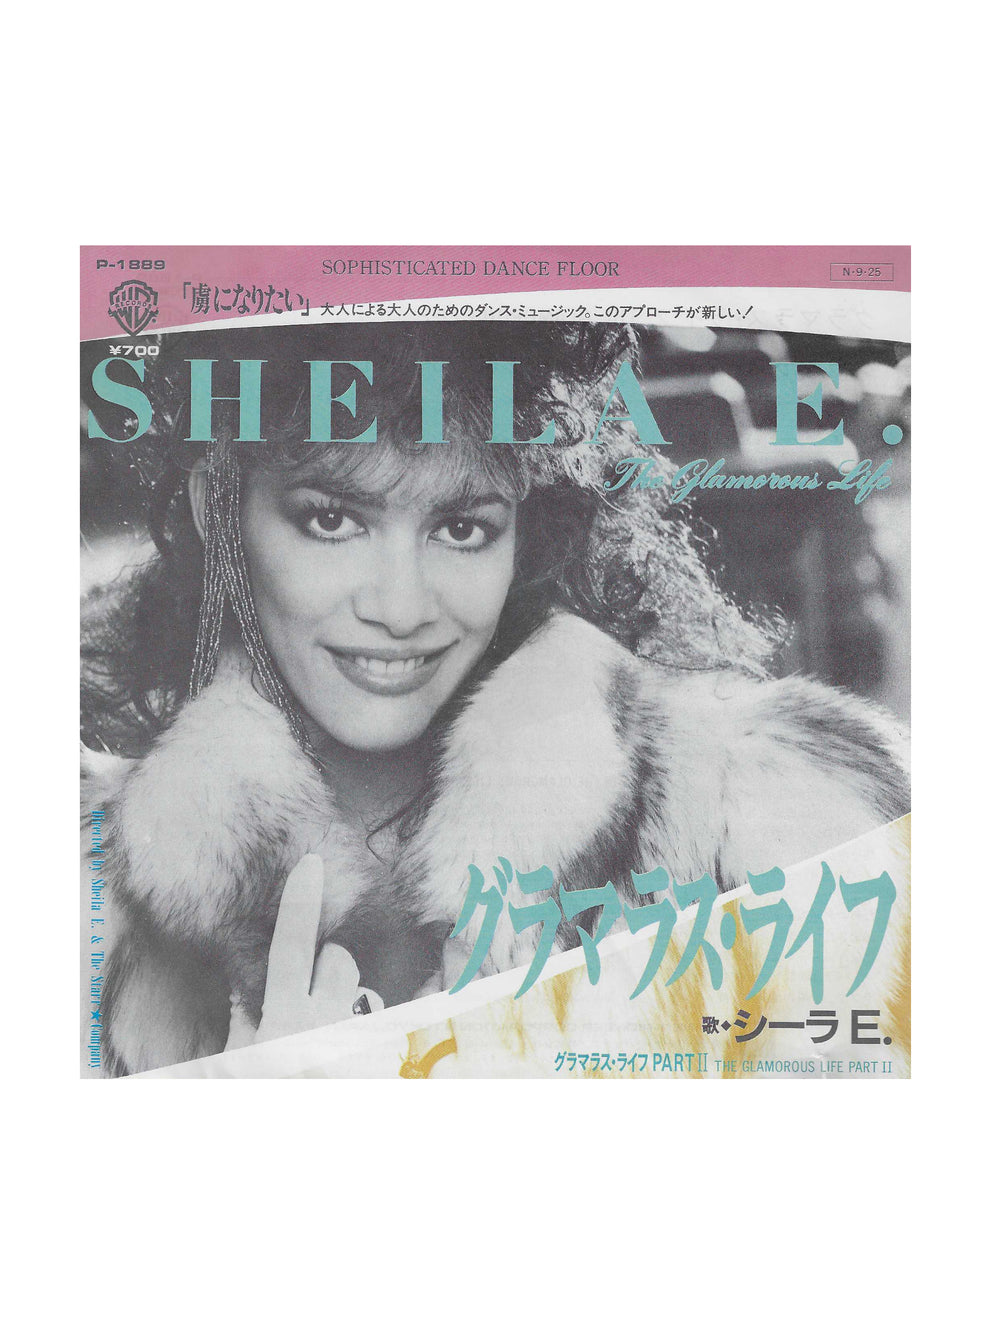 Prince – Sheila E The Glamorous Life Vinyl 7"Japan Preloved: 1984